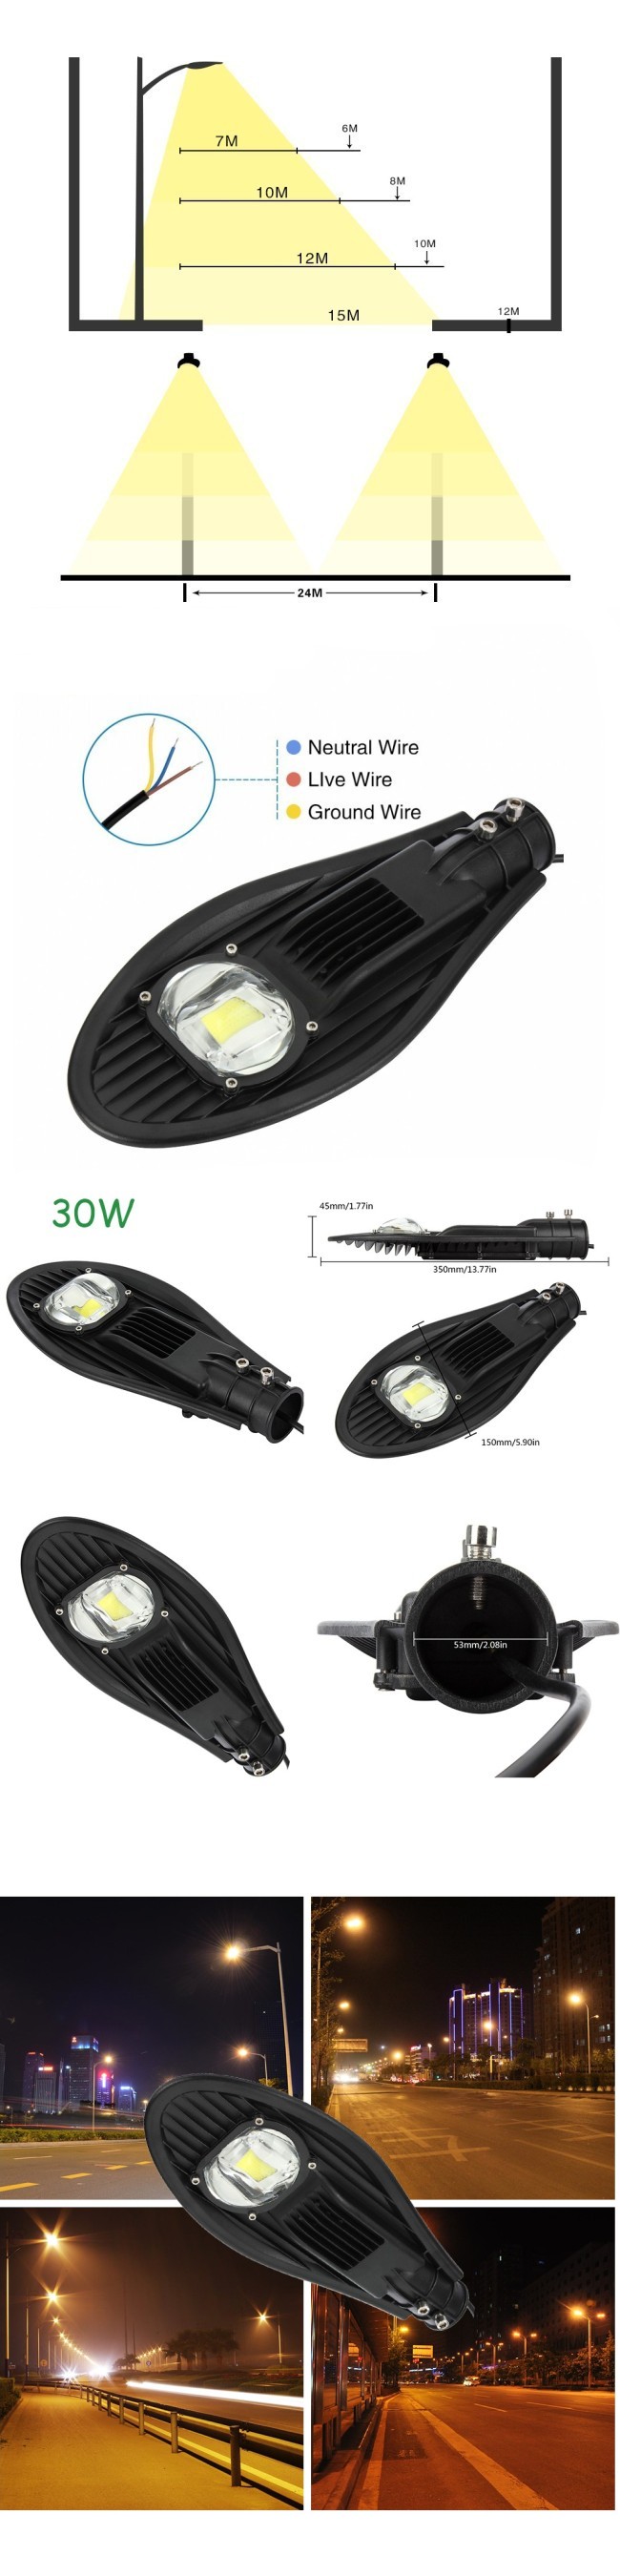 5 Years Warranty Ce RoHS TUV Outdoor 20W LED Street Light IP65 Waterproof Road Light